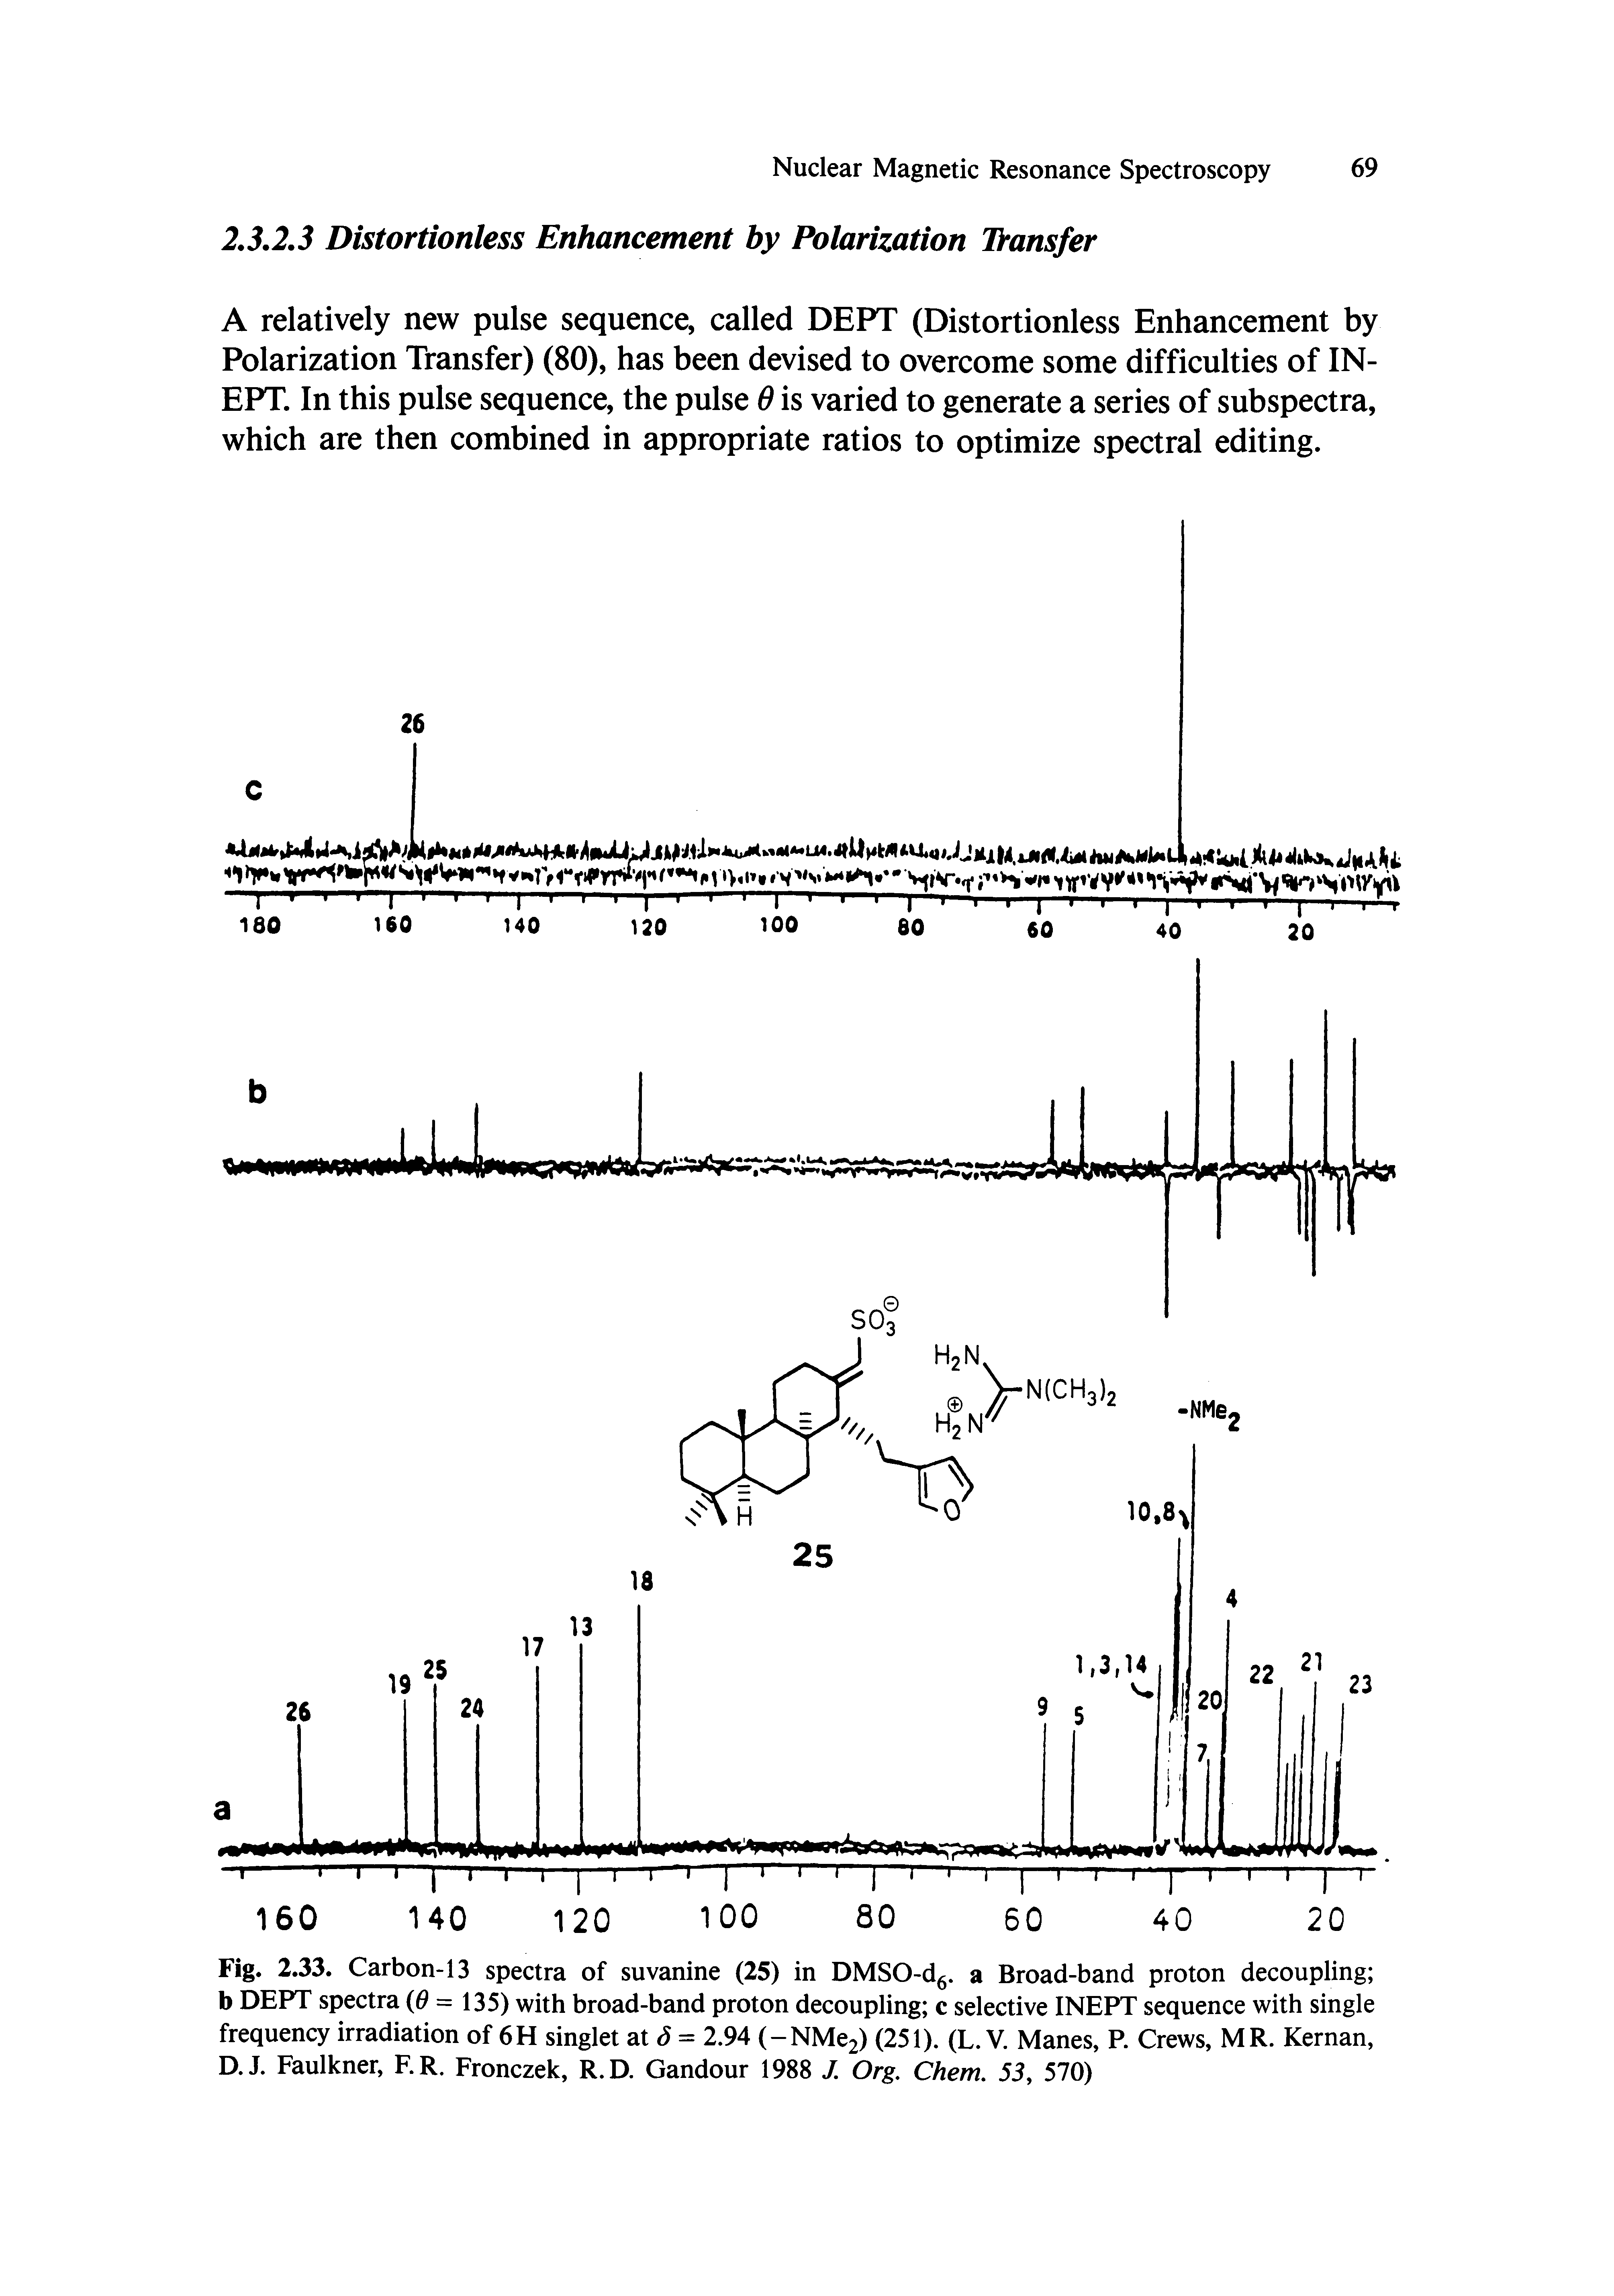 Fig. 2.33. Carbon-13 spectra of suvanine (25) in DMSO-dg. a Broad-band proton decoupling b DEPT spectra (0 = 135) with broad-band proton decoupling c selective INEPT sequence with single frequency irradiation of 6H singlet at = 2.94 (-NMe2) (251). (L. V. Manes, P. Crews, MR. Kernan, D.J. Faulkner, F.R. Fronczek, R.D. Candour 1988 J. Org. Chem. S3, 570)...